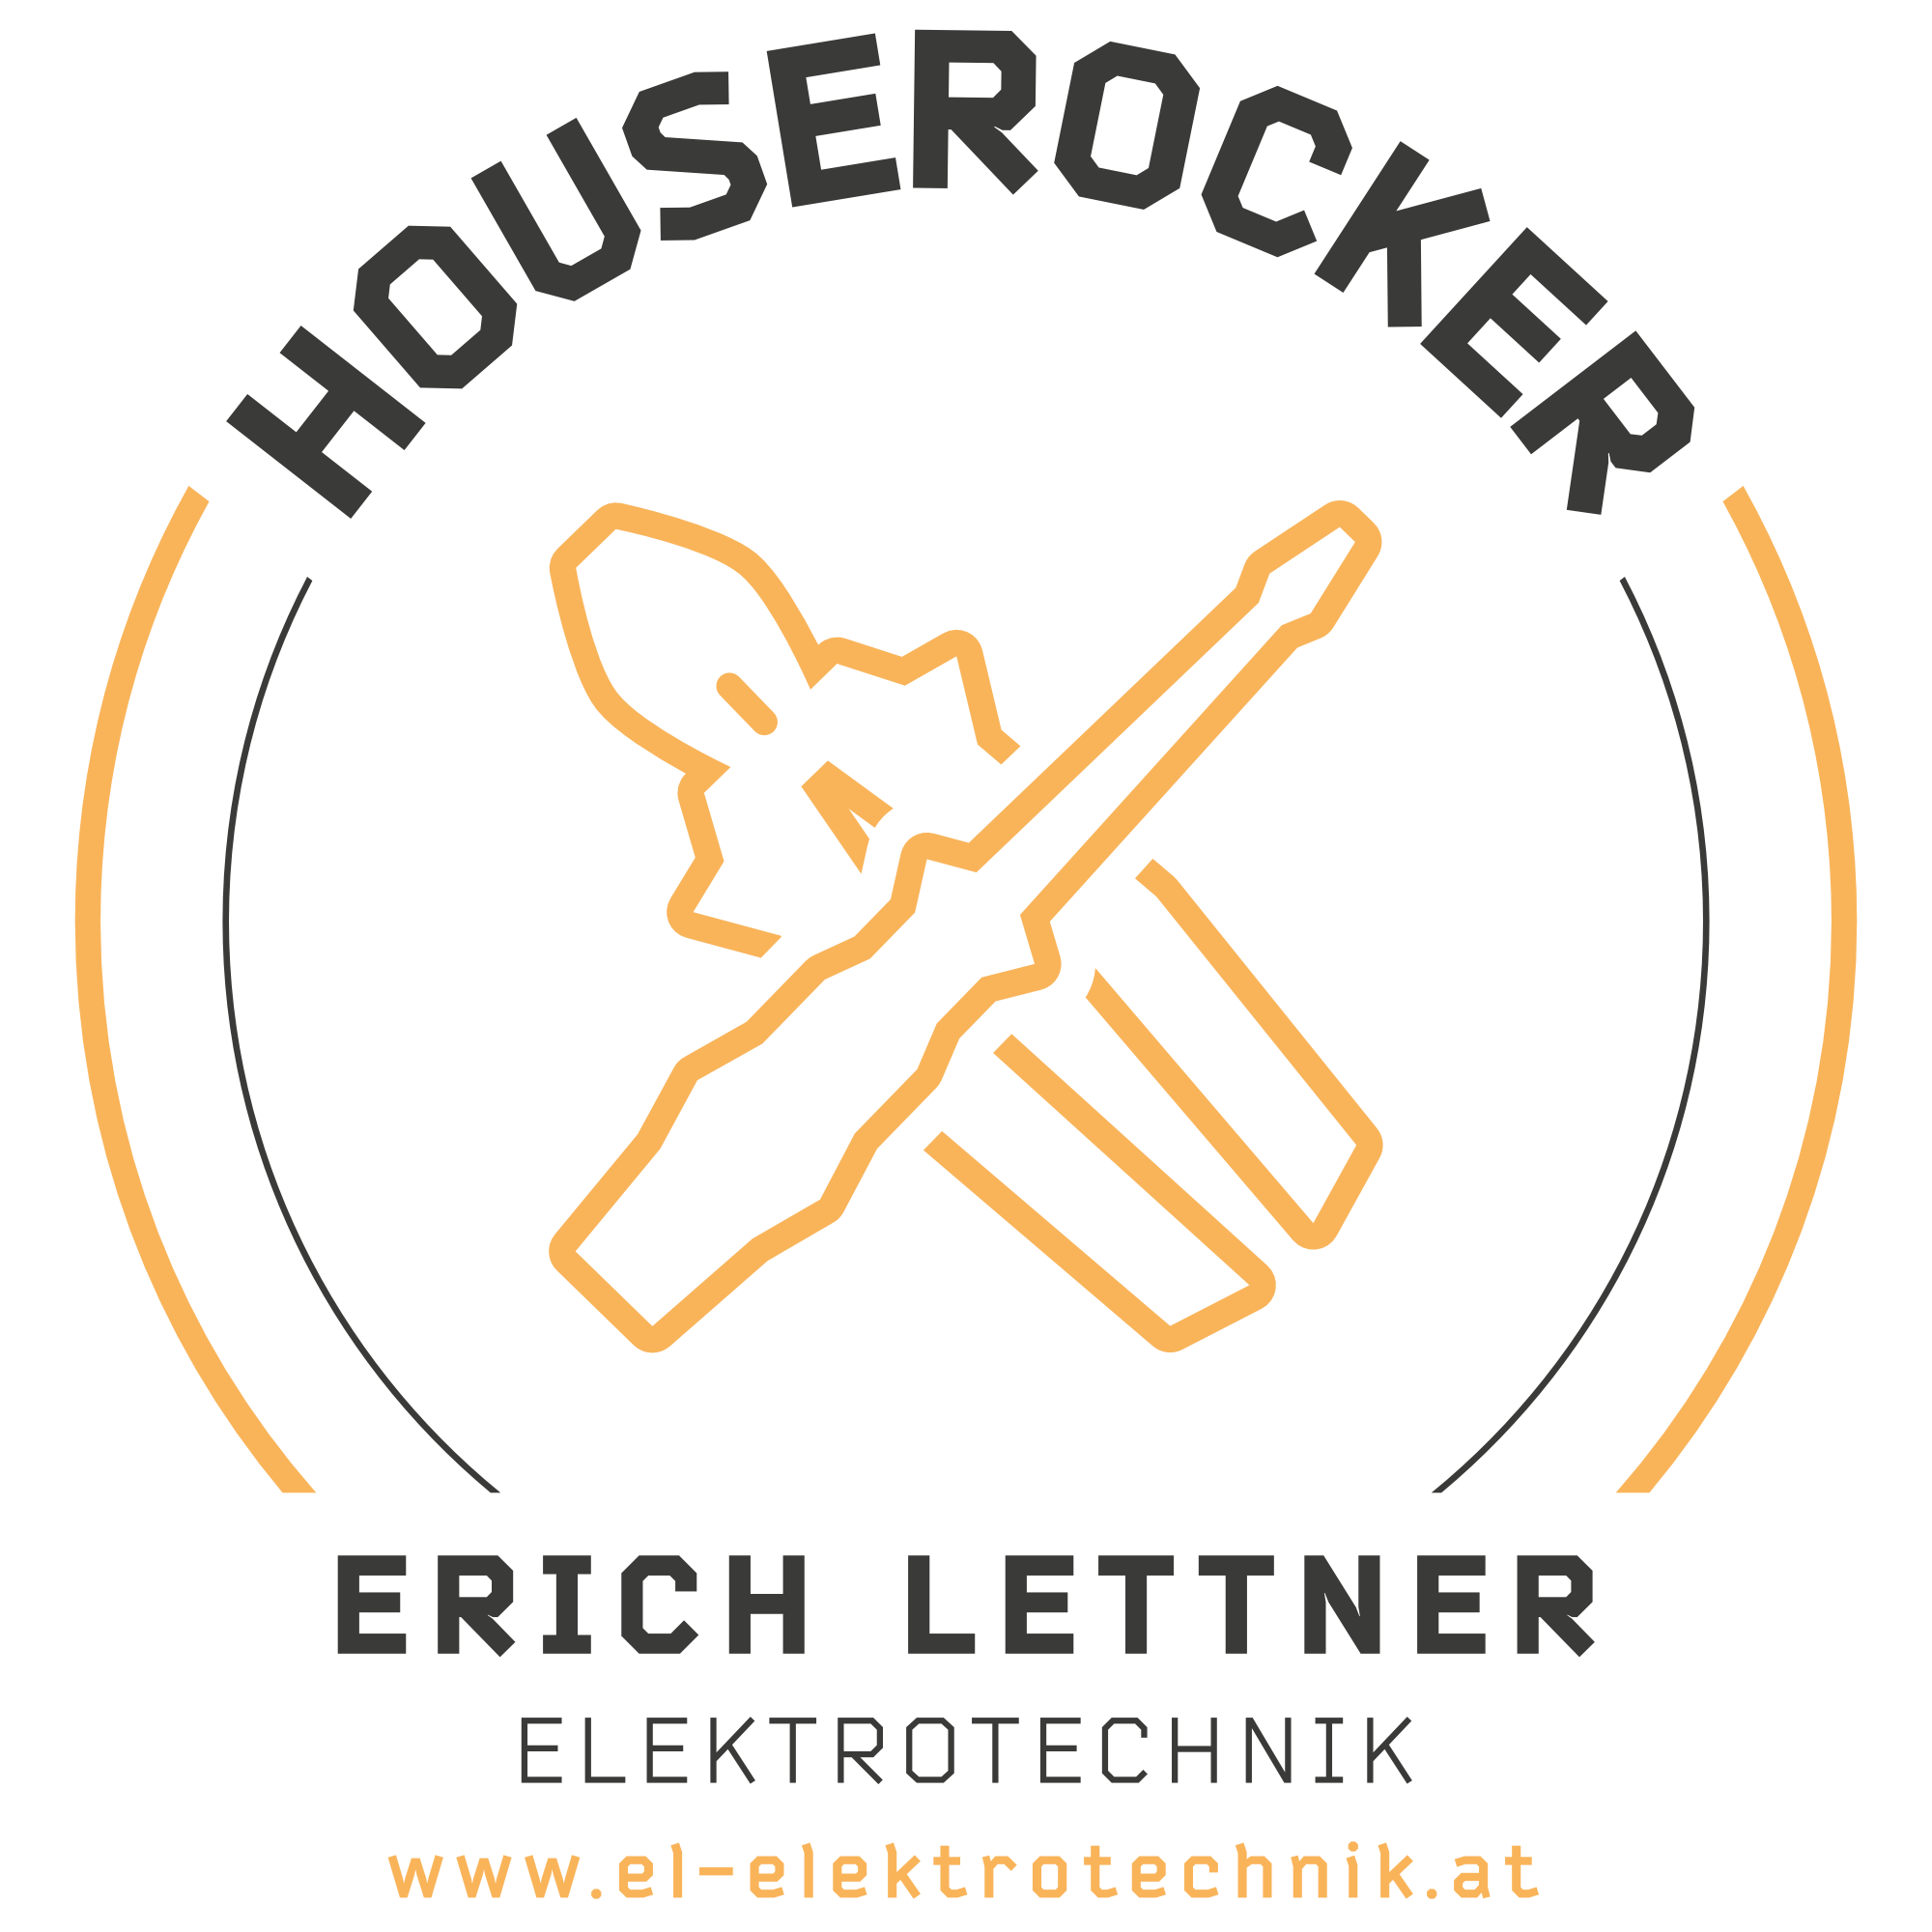 Erich Lettner Elektrotechnik HOUSEROCKER